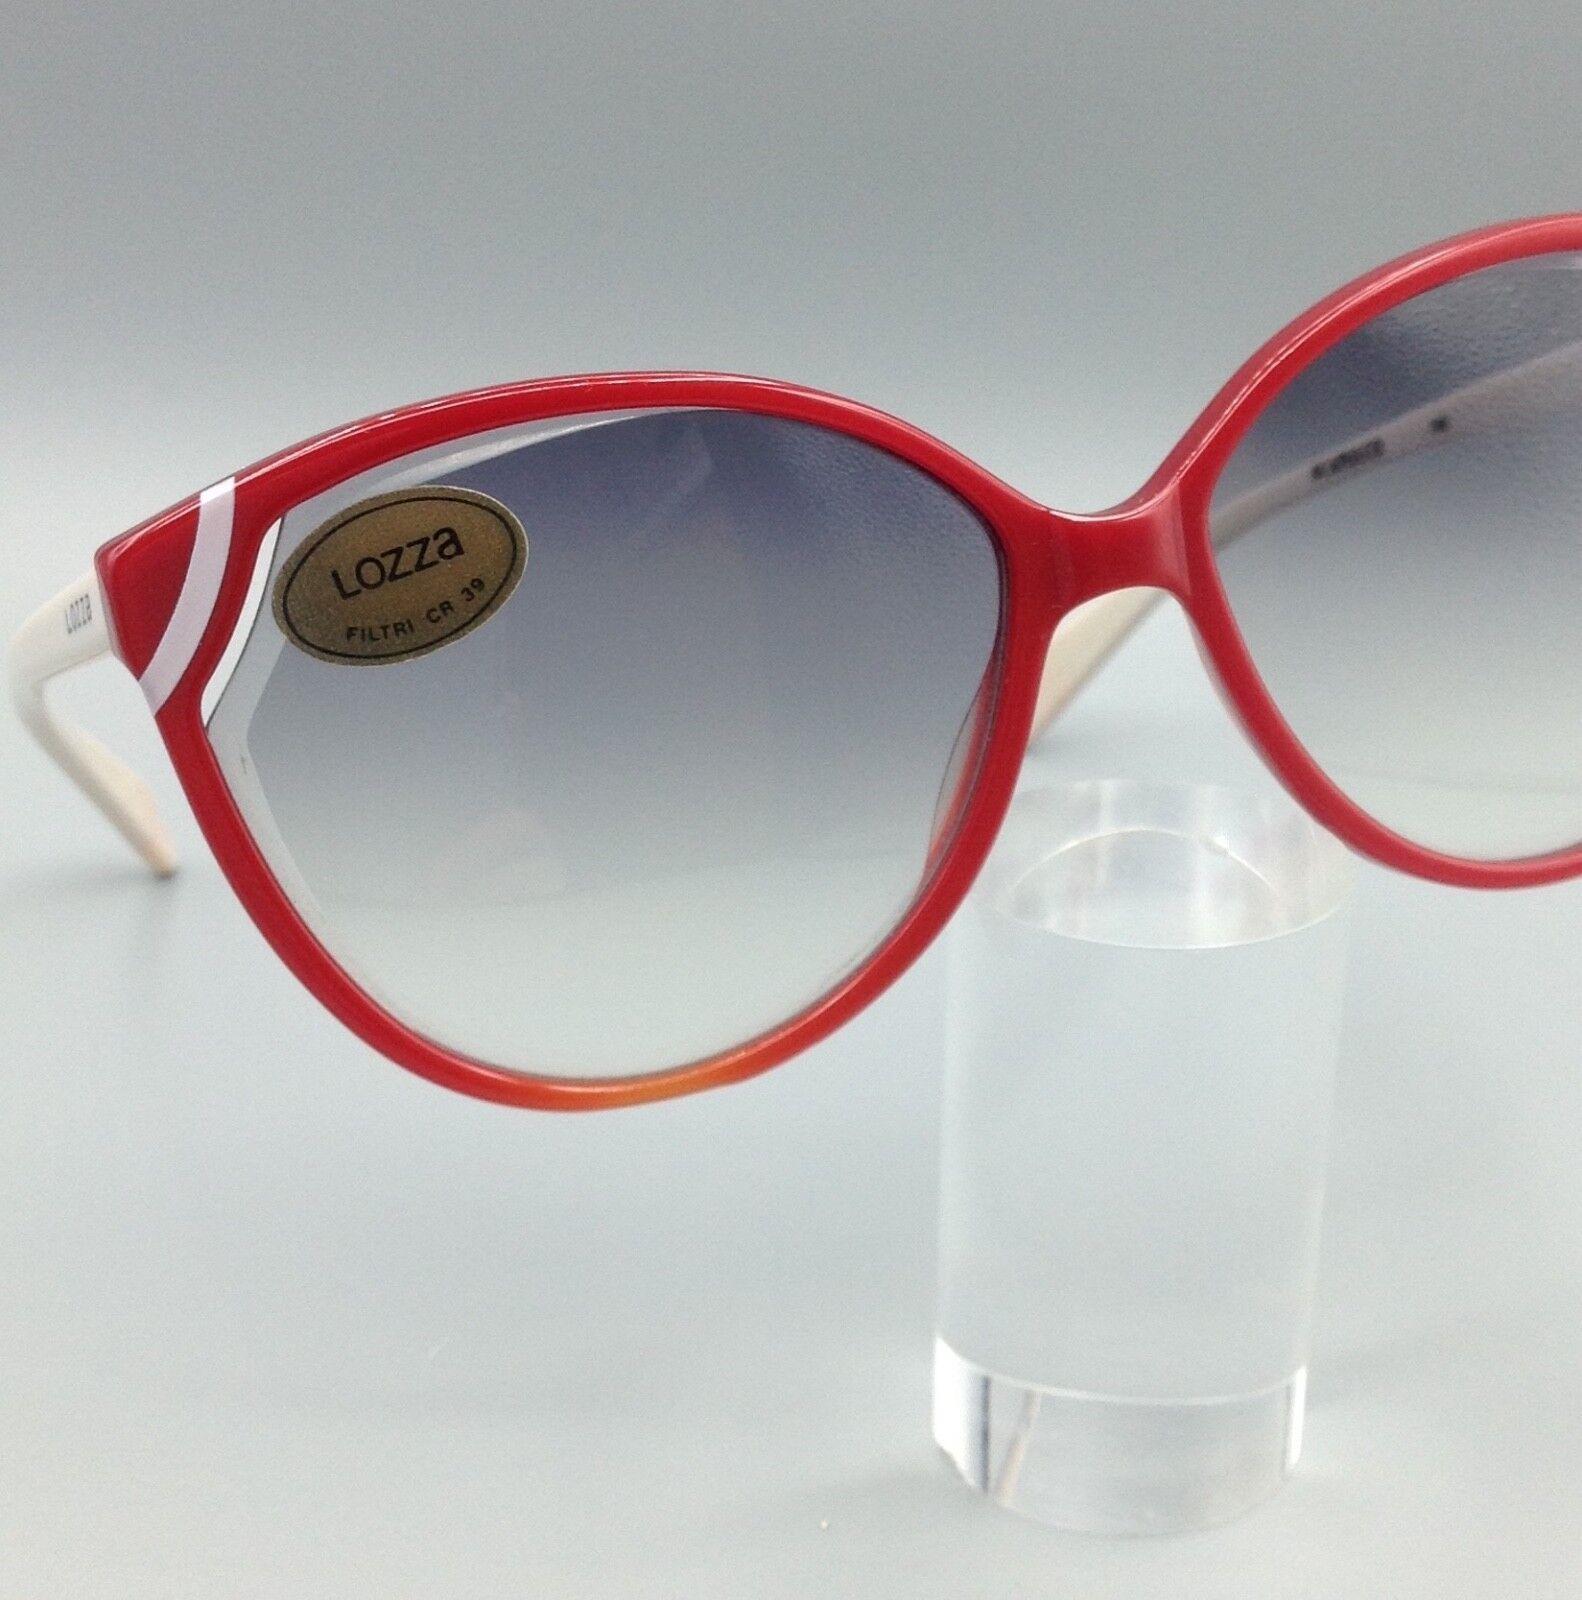 Occhiale da sole LOZZA mod. ACAPULCO vintage red frame made in Italy Sunglasses